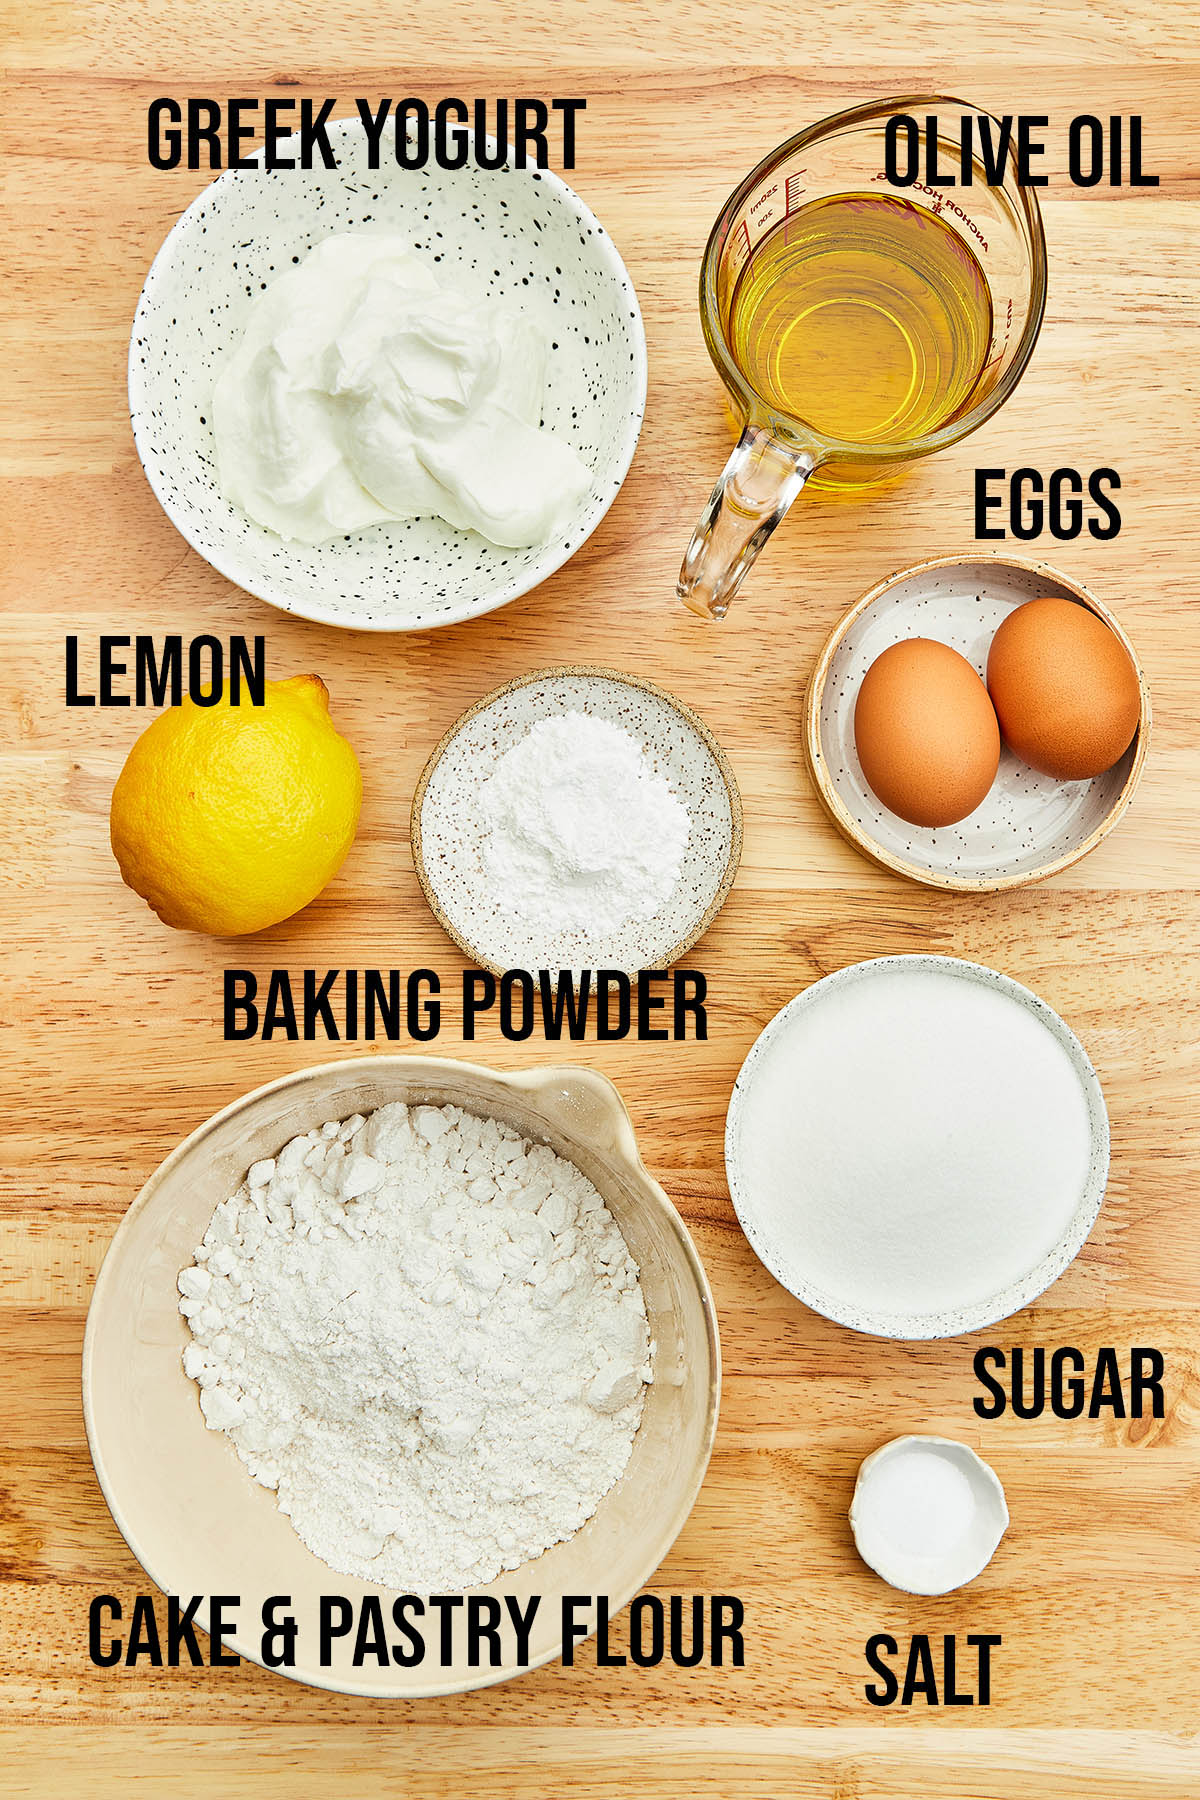 Ingredients to make lemon olive oil cake.